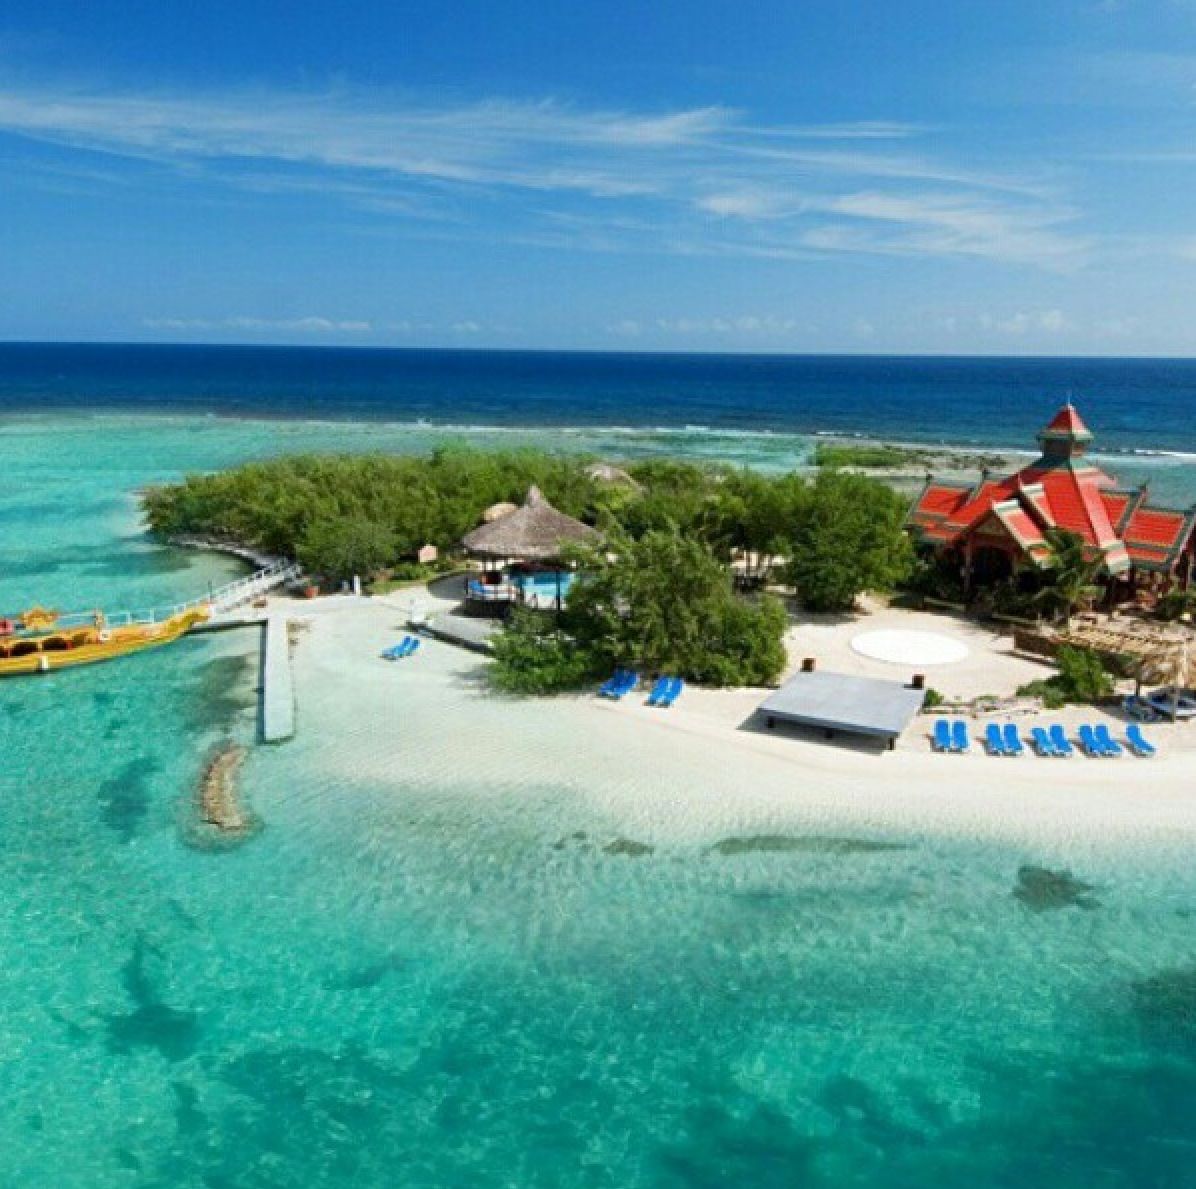 Sandals Resort, Montego Bay, Jamaica